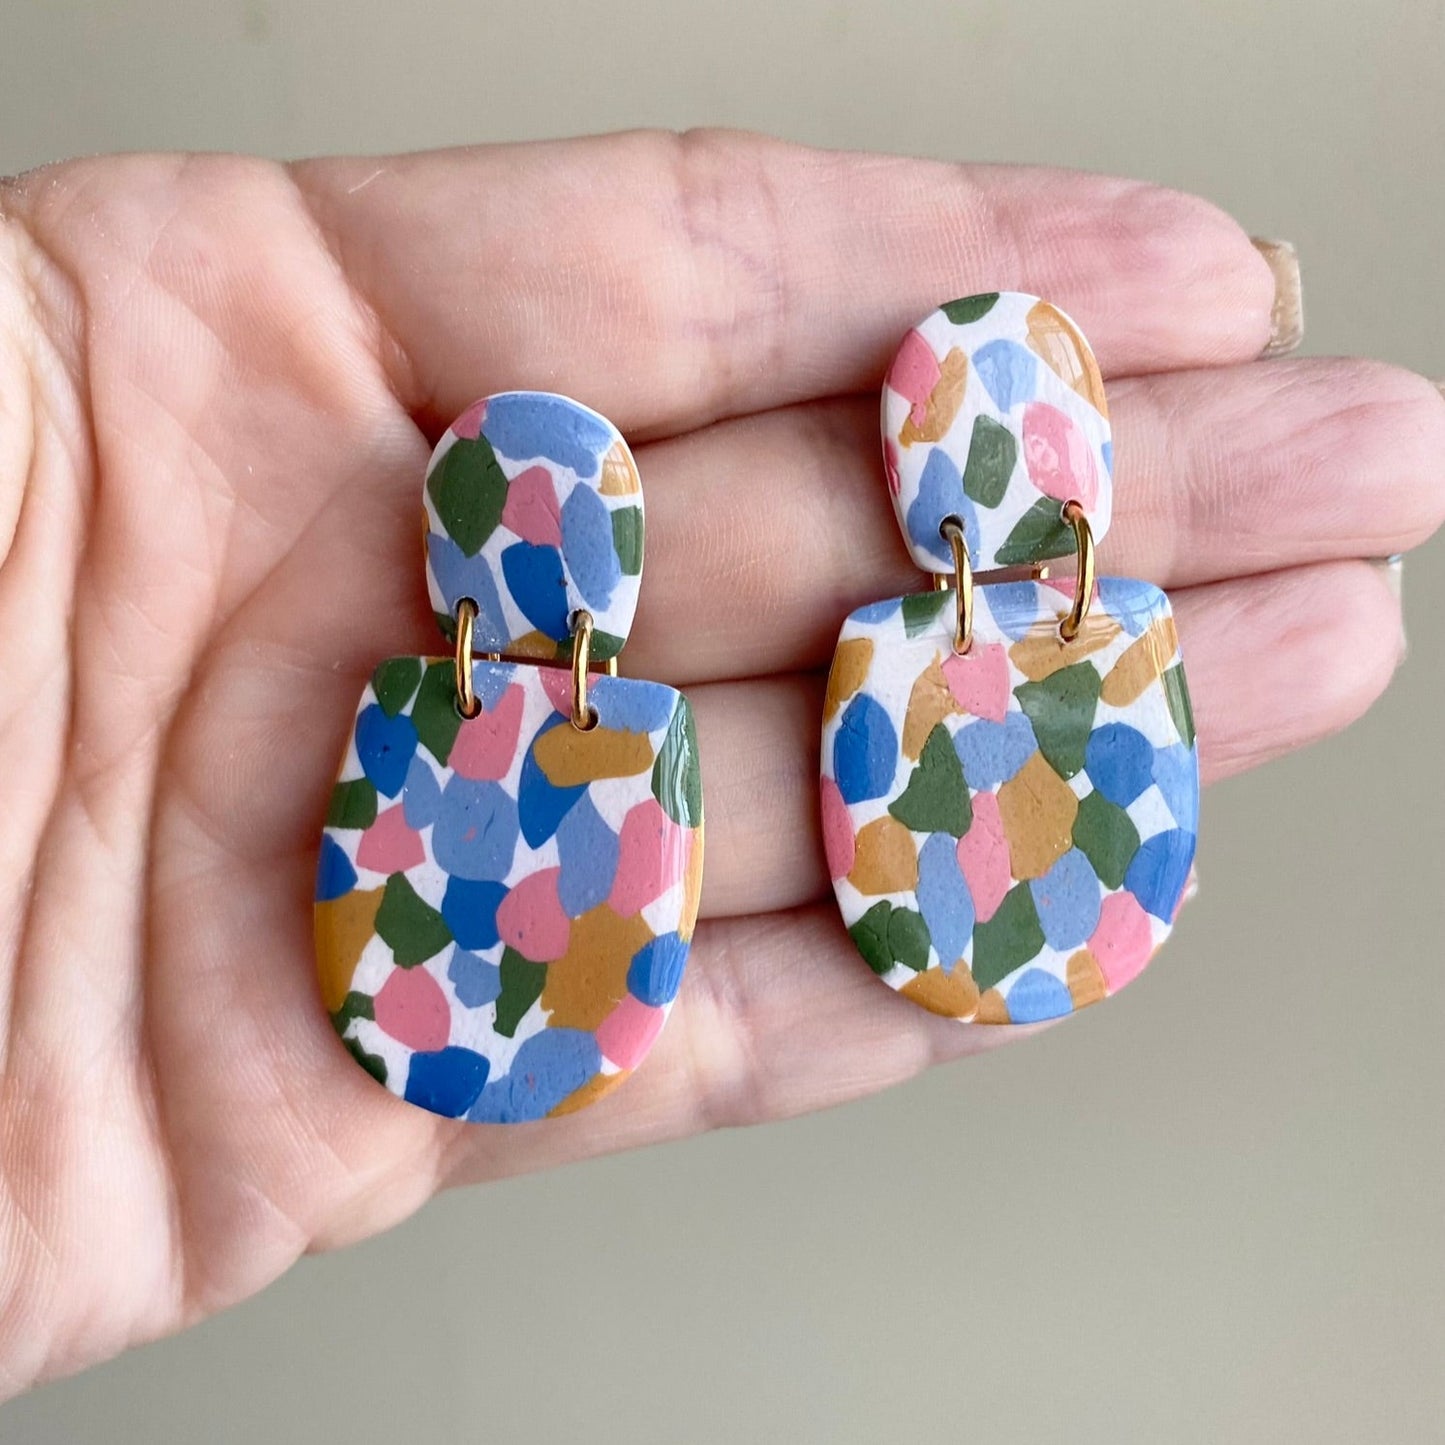 Random pattern artsy abstract pink / mustard yellow / blue / green polymer clay dangle earrings